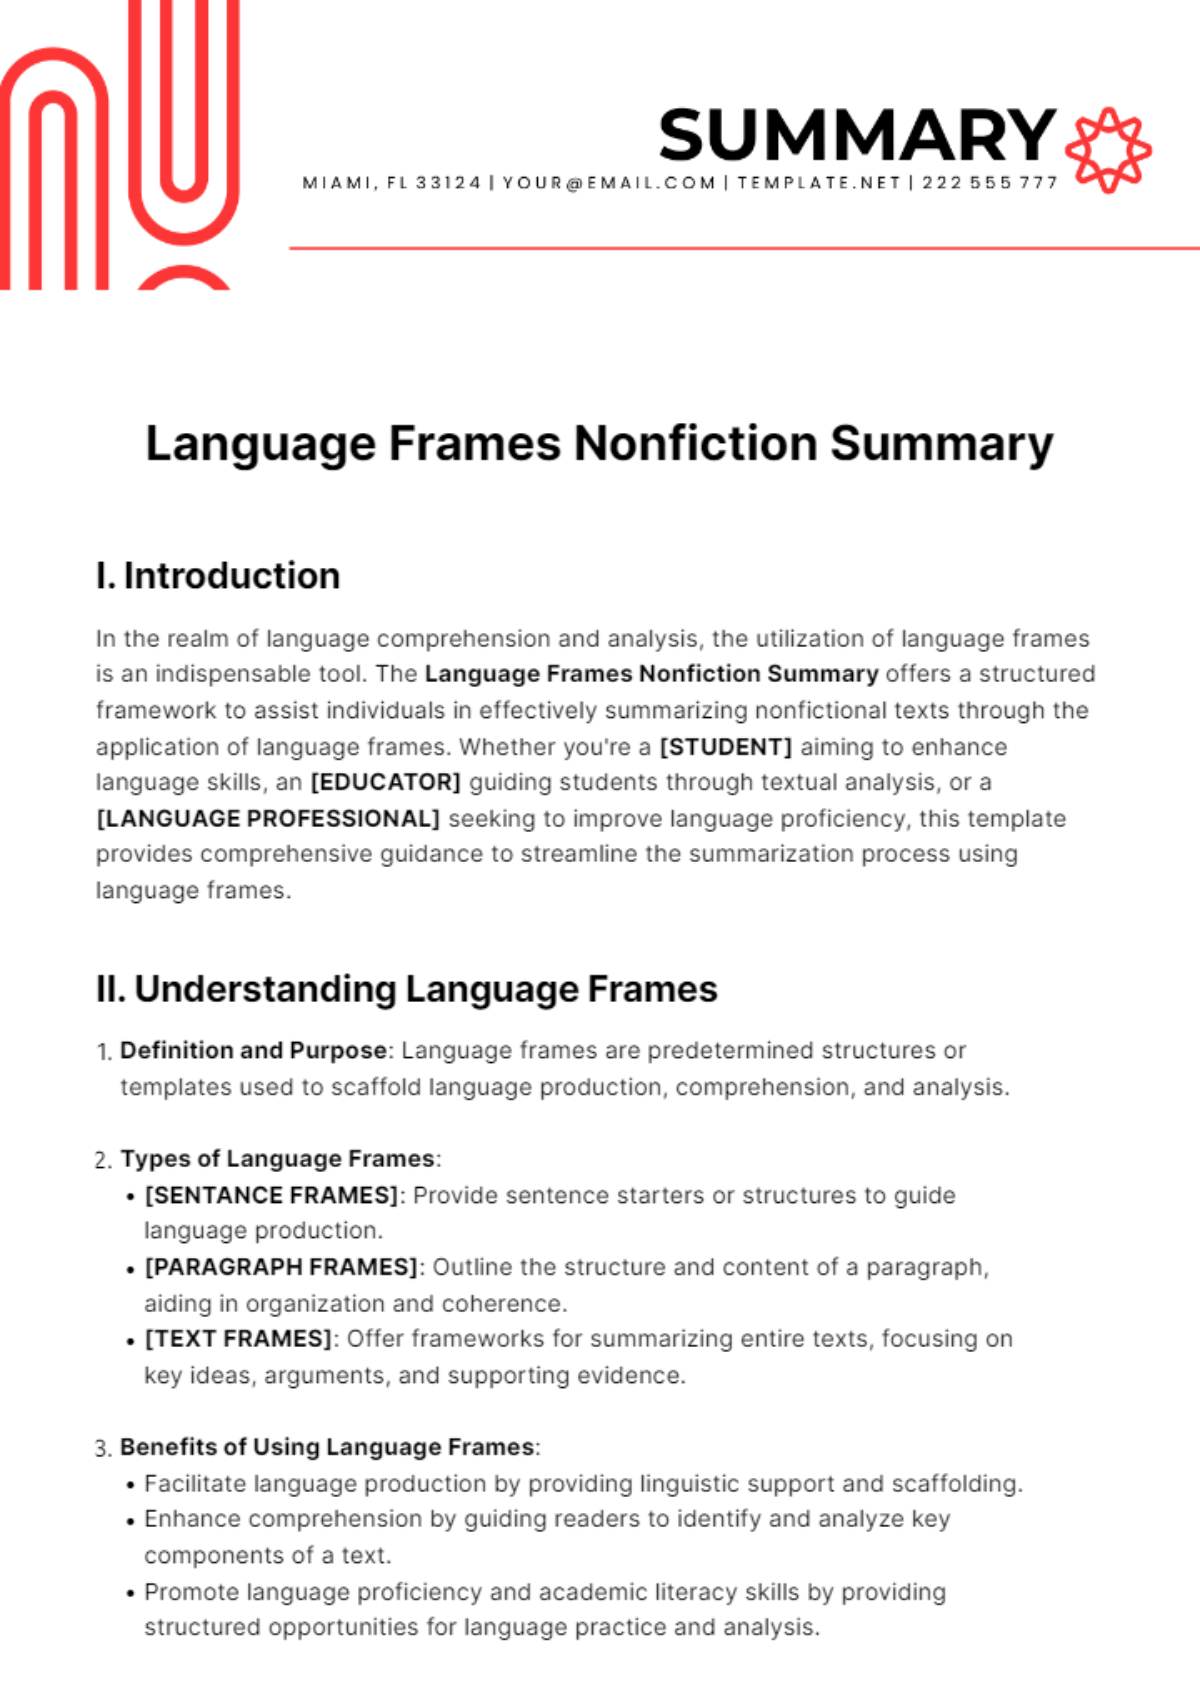 Language Frames Nonfiction Summary Template